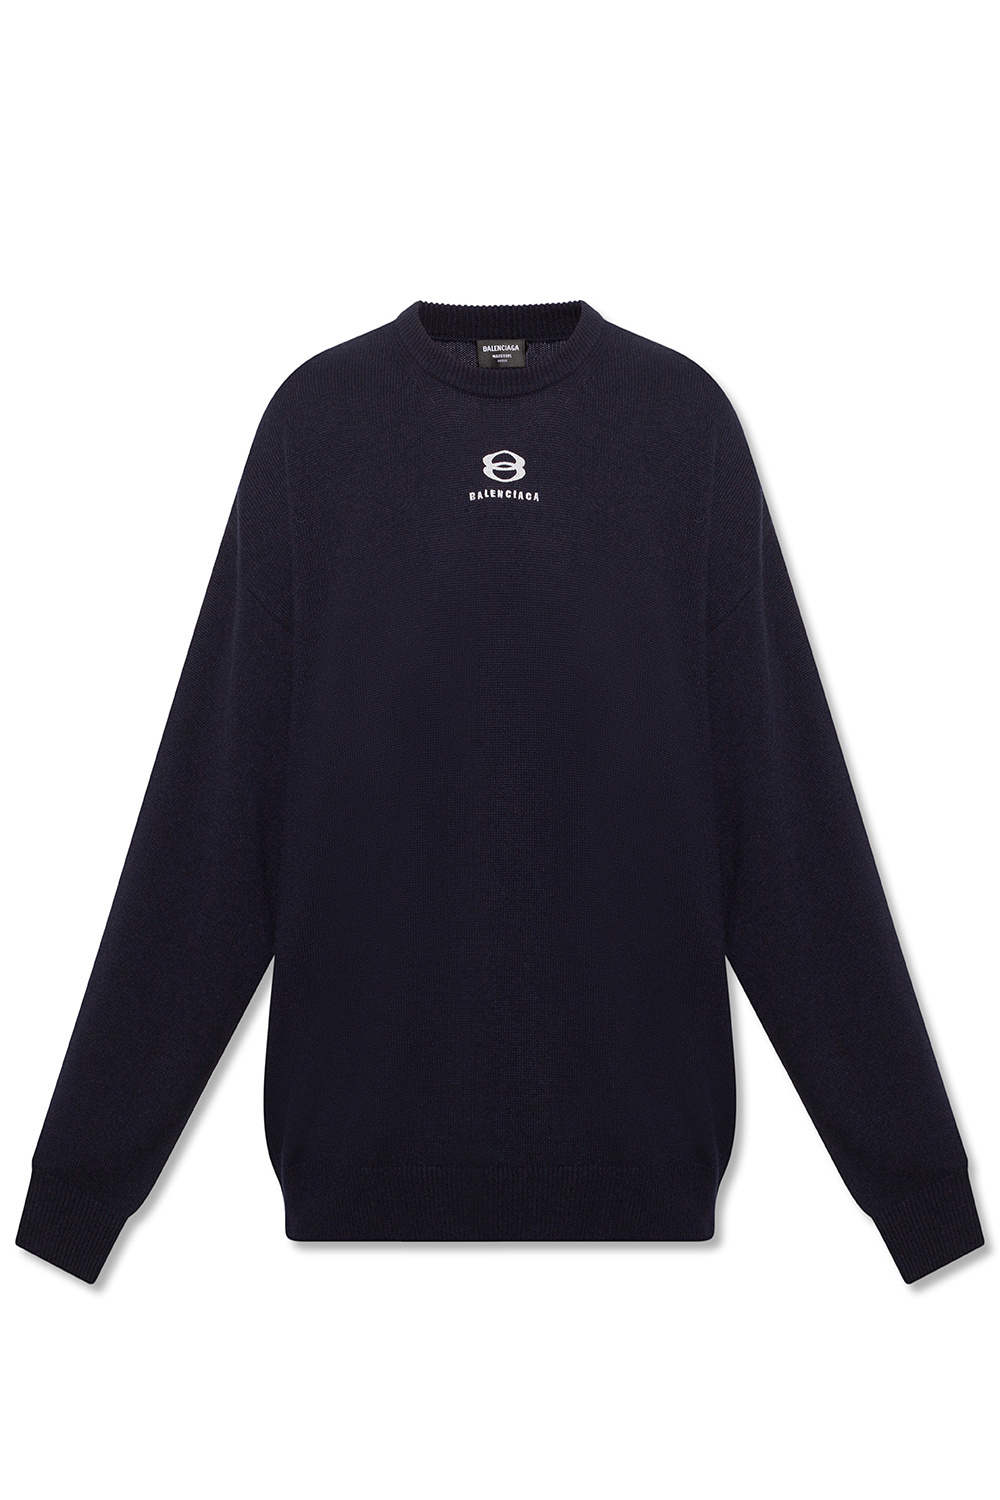 Balenciaga Cashmere SWEATSHIRT sweater